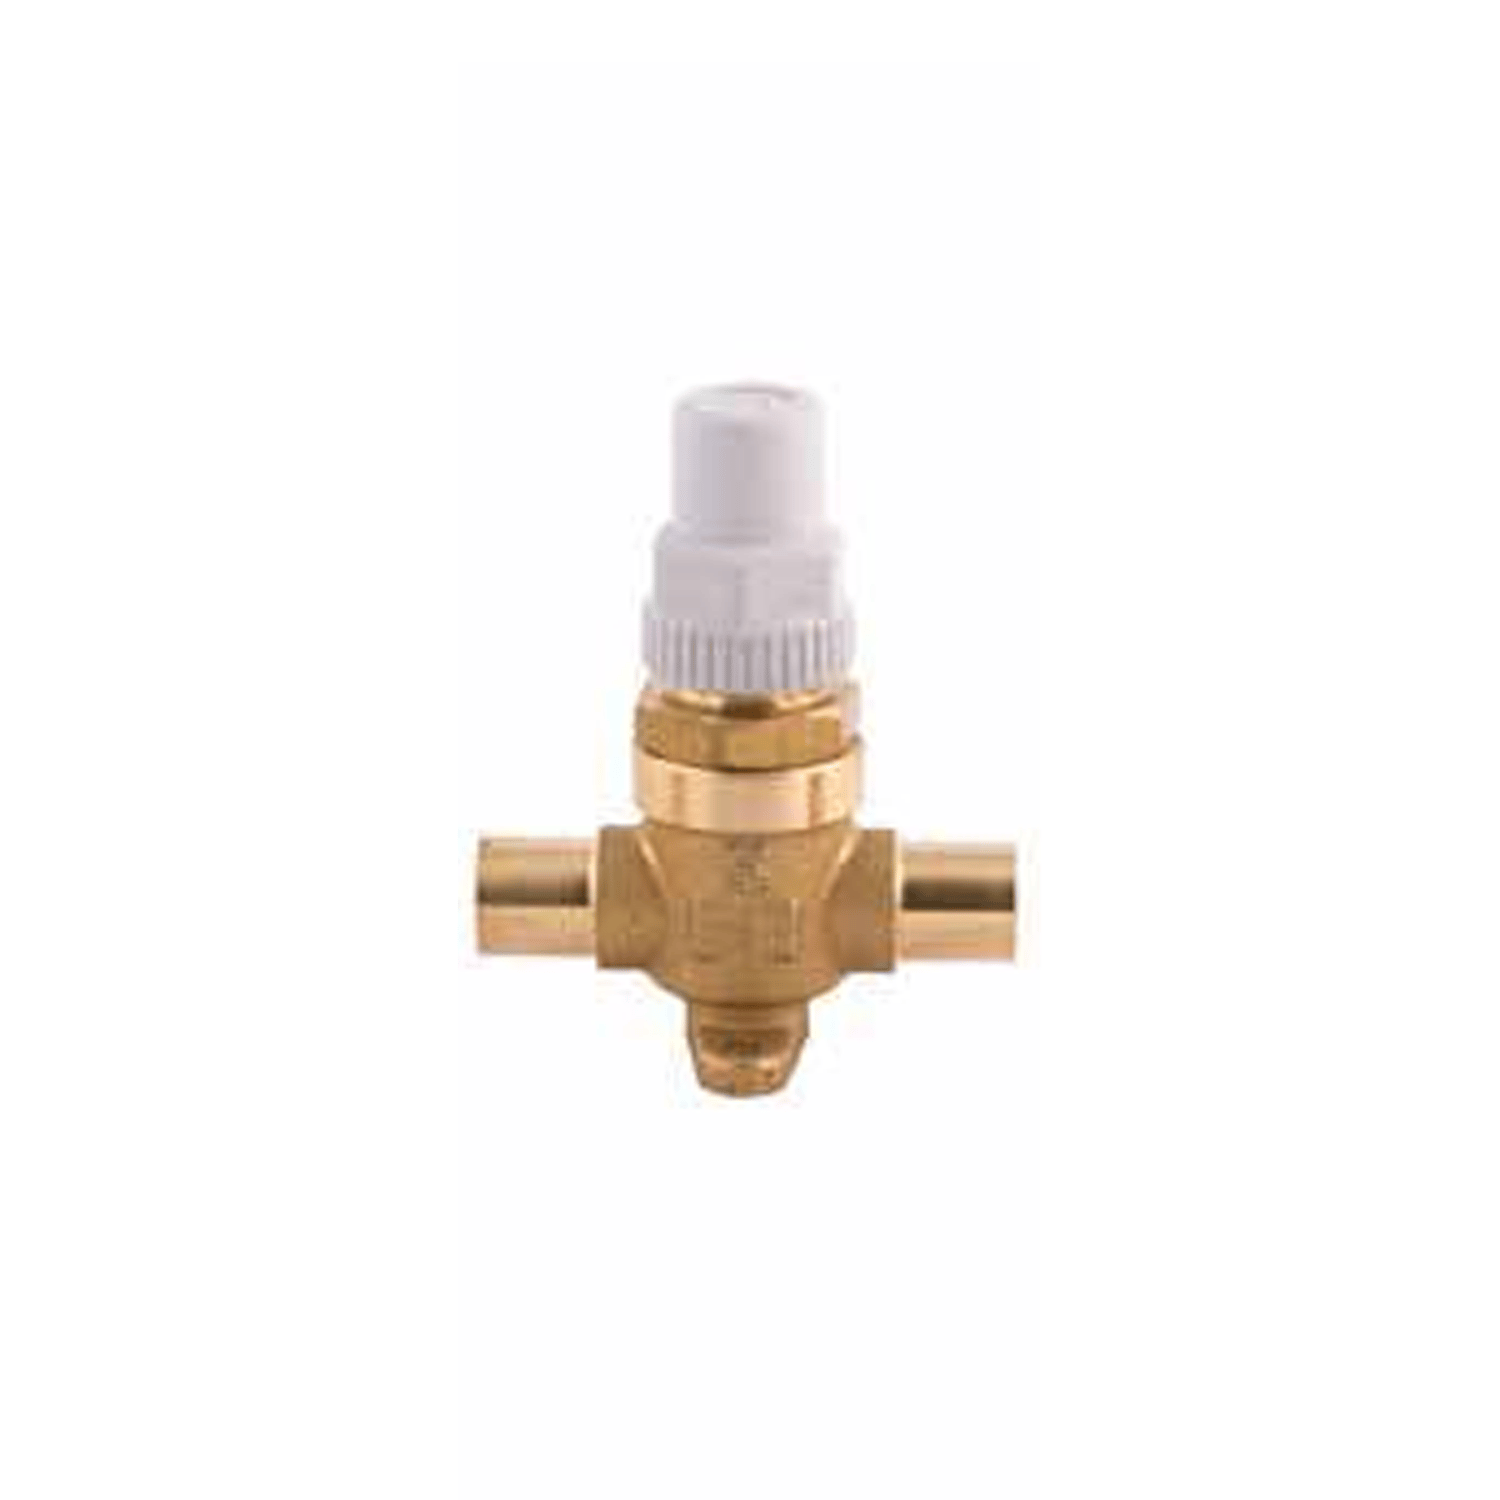 Diaphragm valve CASTEL, CO2, 6012E / 22, 1/4 "SAE flare x 1/4" ODS solder connection